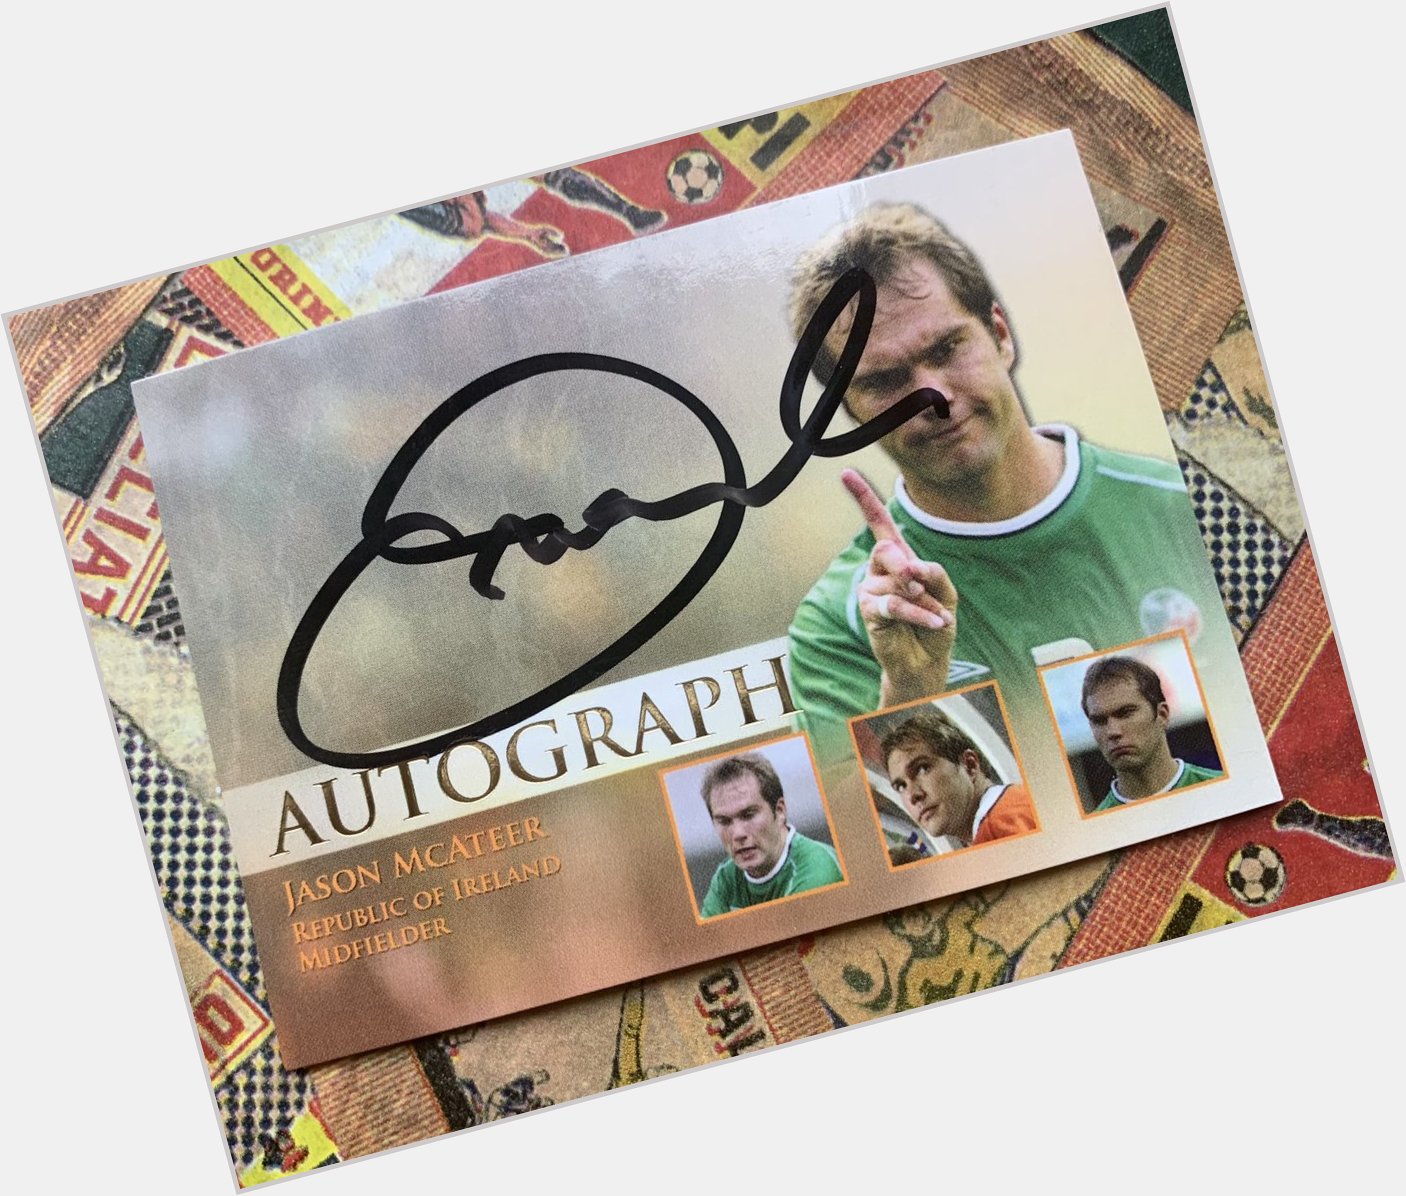 Jason McAteer in Unique 2013 Autograph card /55

Happy birthday     